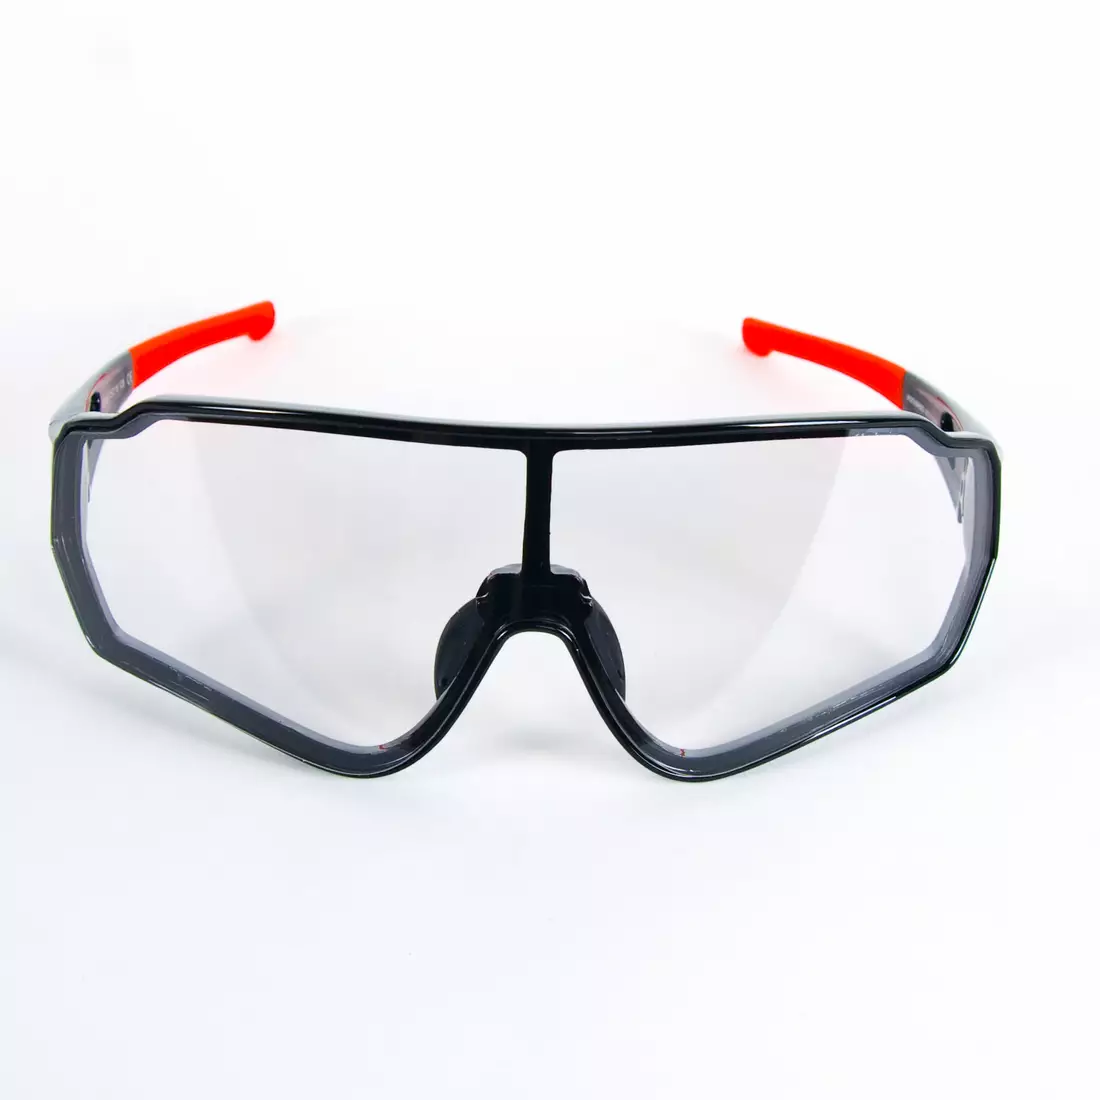 Rockbros 10161 cyklistické / športové okuliare s fotochromatickou úpravou čierna a červená